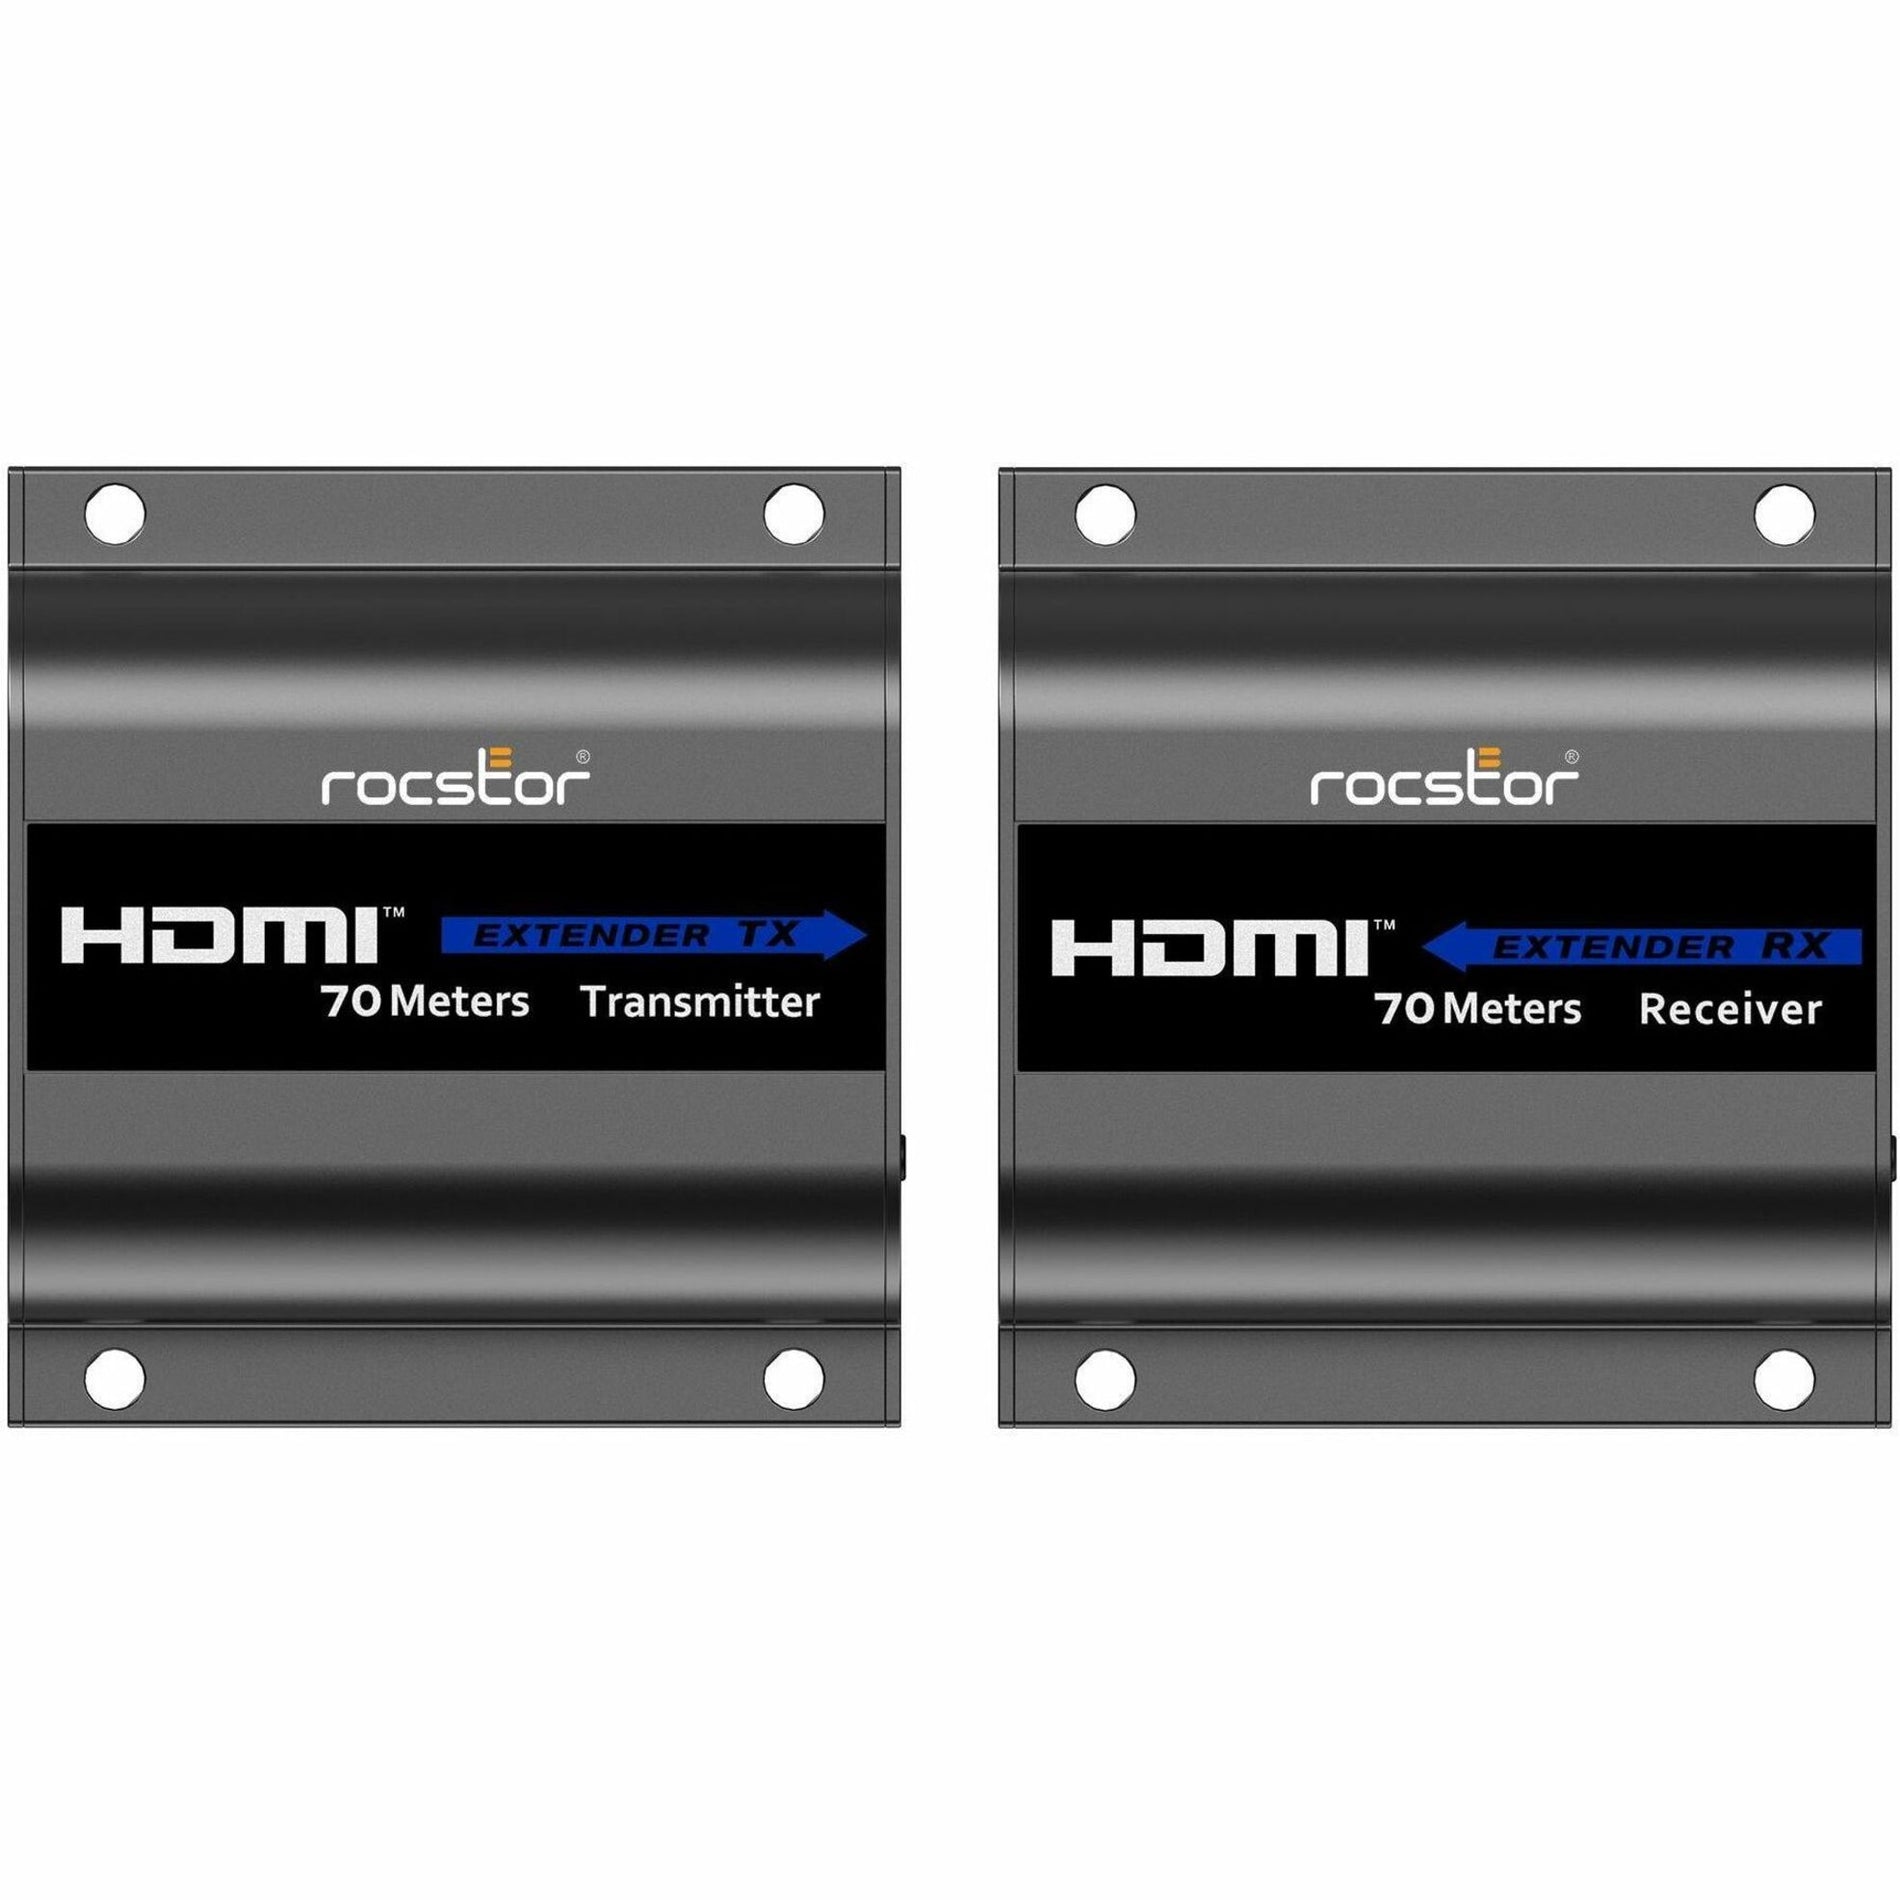 Rocstor Y10G008-B1 TrueReach HDMI Extender, 4K Video Extender Transmitter/Receiver